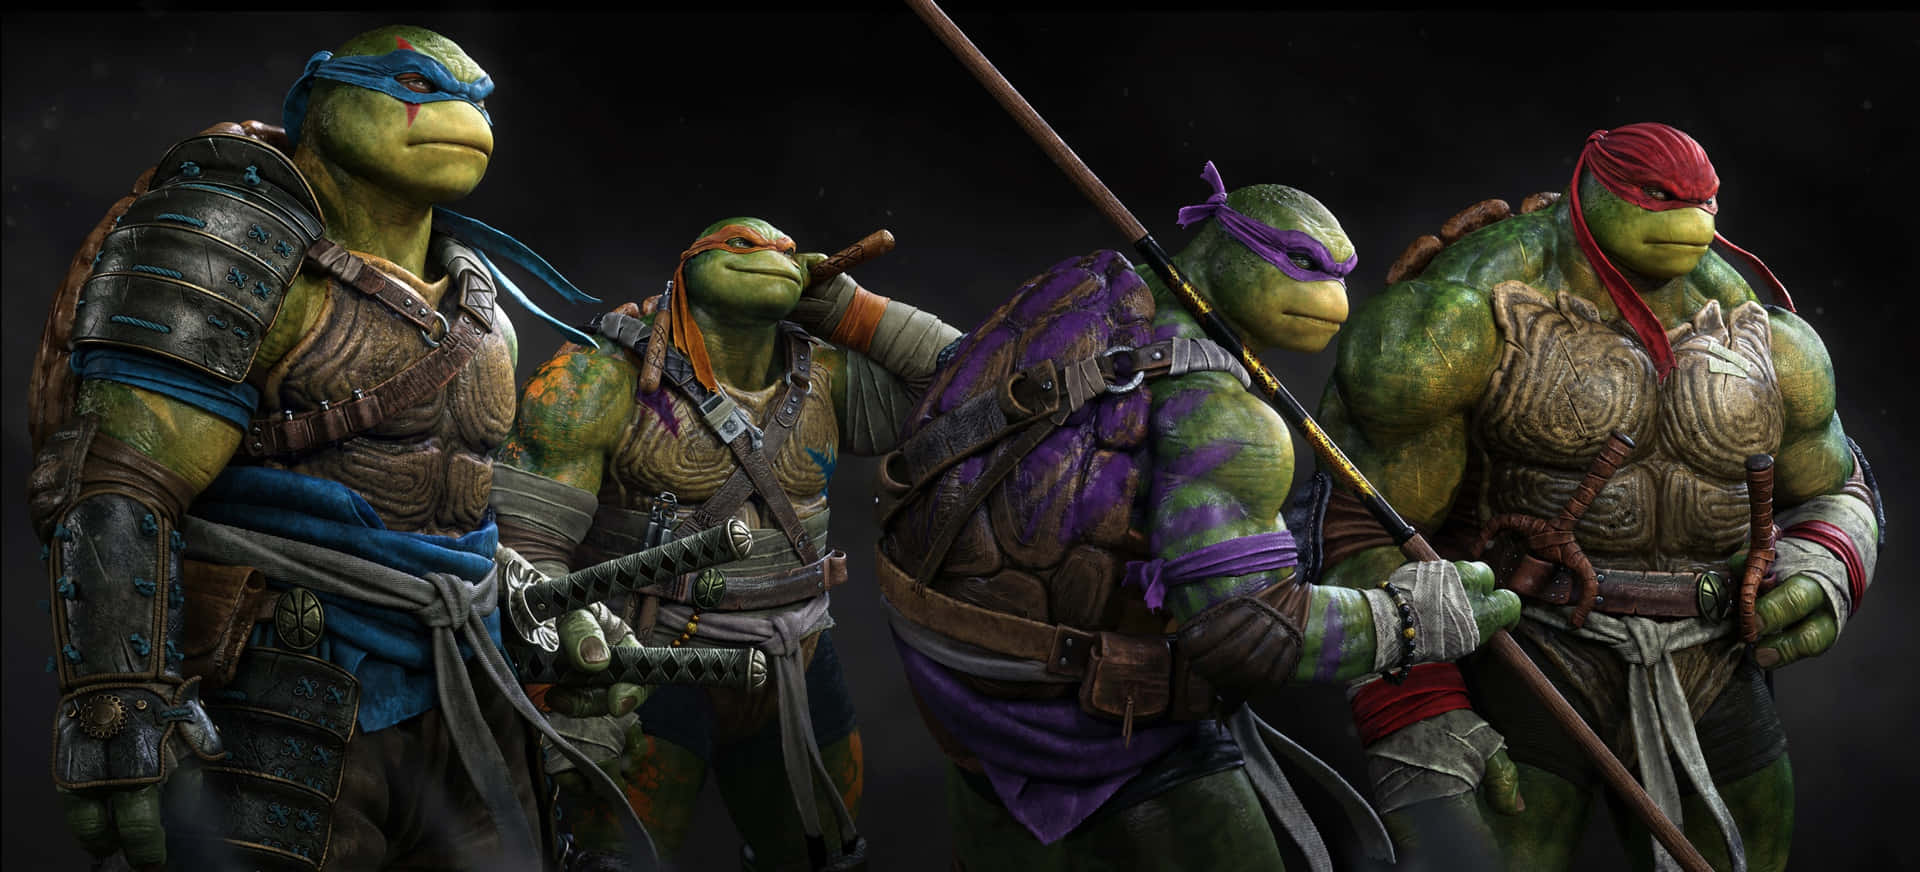 Heroes in a half shell: Leonardo, Raphael, Donatello and Michelangelo!"